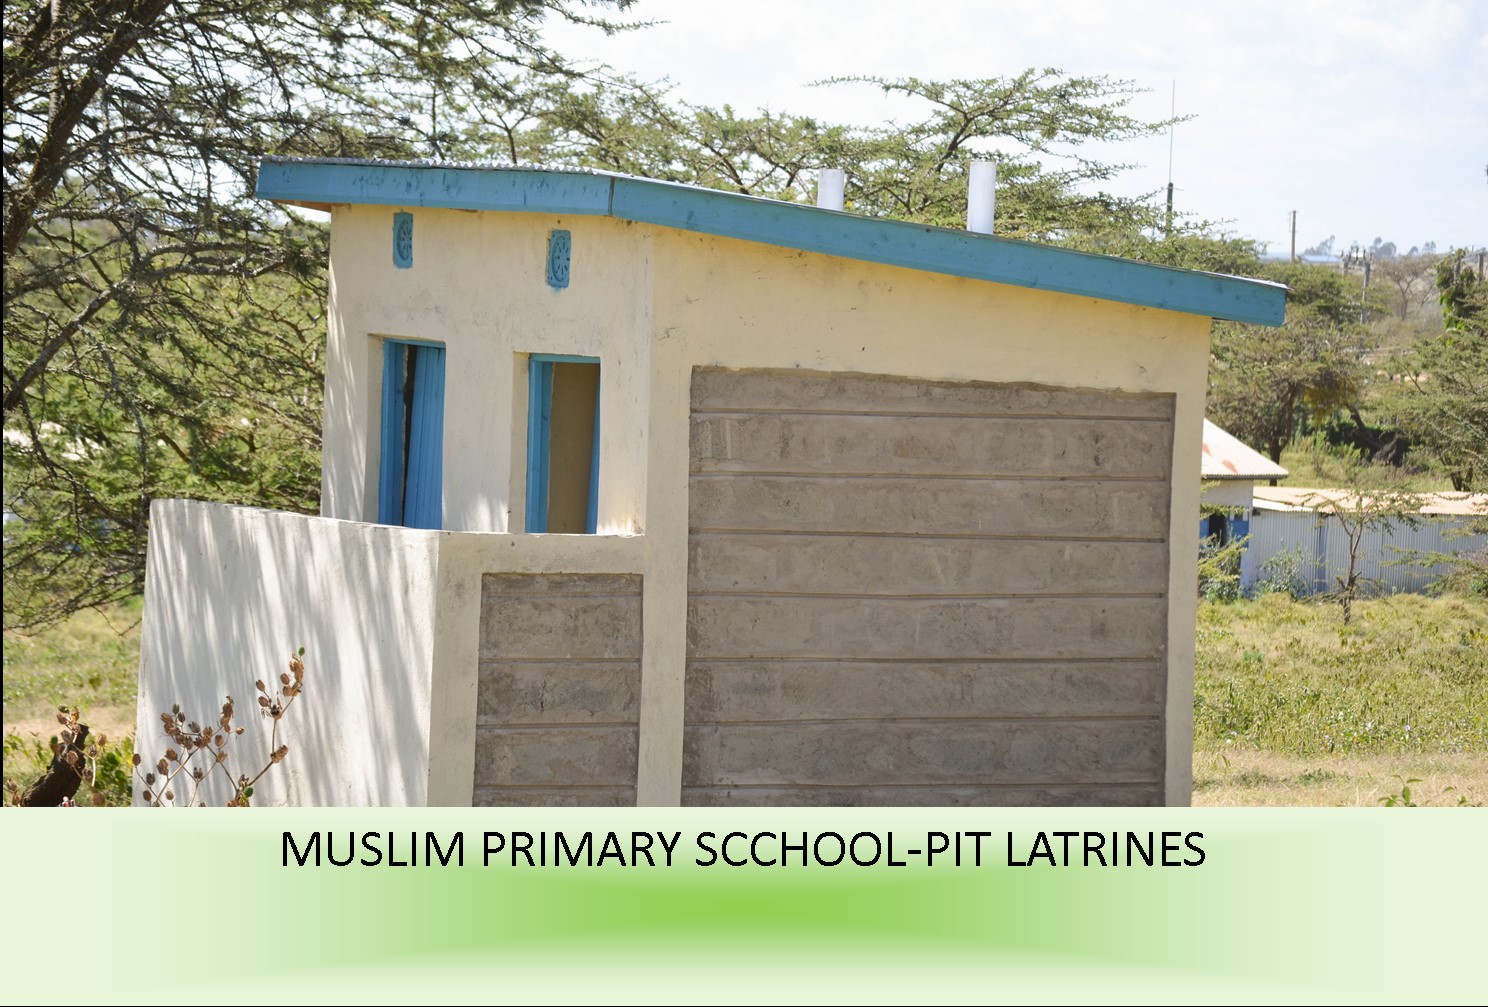 https://samburu-west.ngcdf.go.ke/wp-content/uploads/2021/08/muslim-primary-school-pit-latrines.jpg